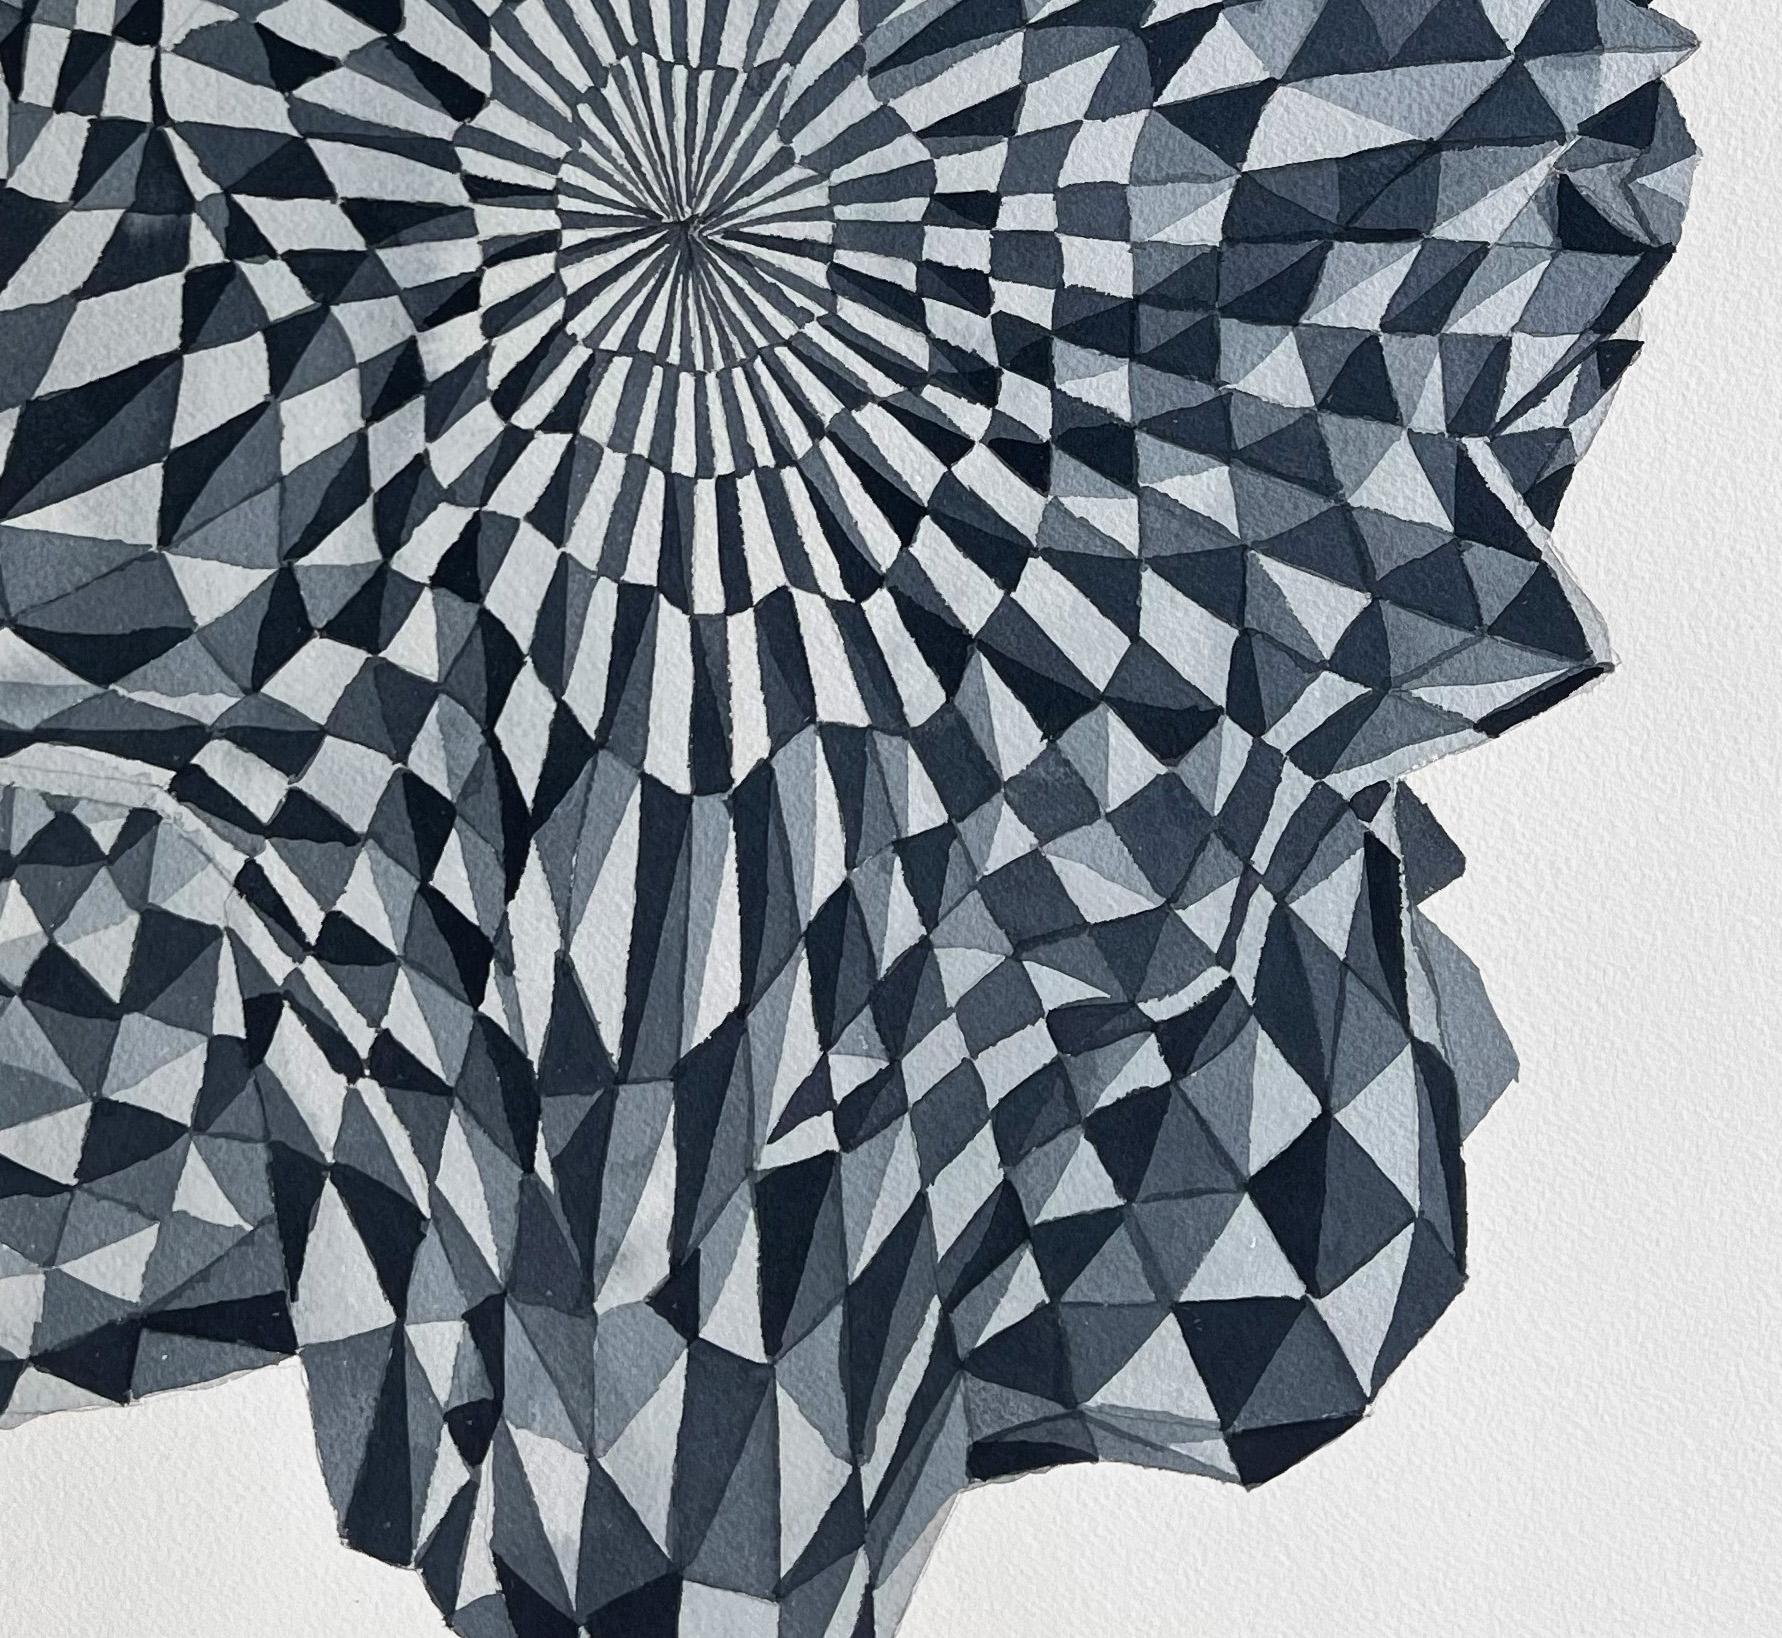 Geometría fractal 3. Das Gedächtnis der Narzisse.  Aquarellmalerei (Abstrakt), Art, von James Bonachea Guerra